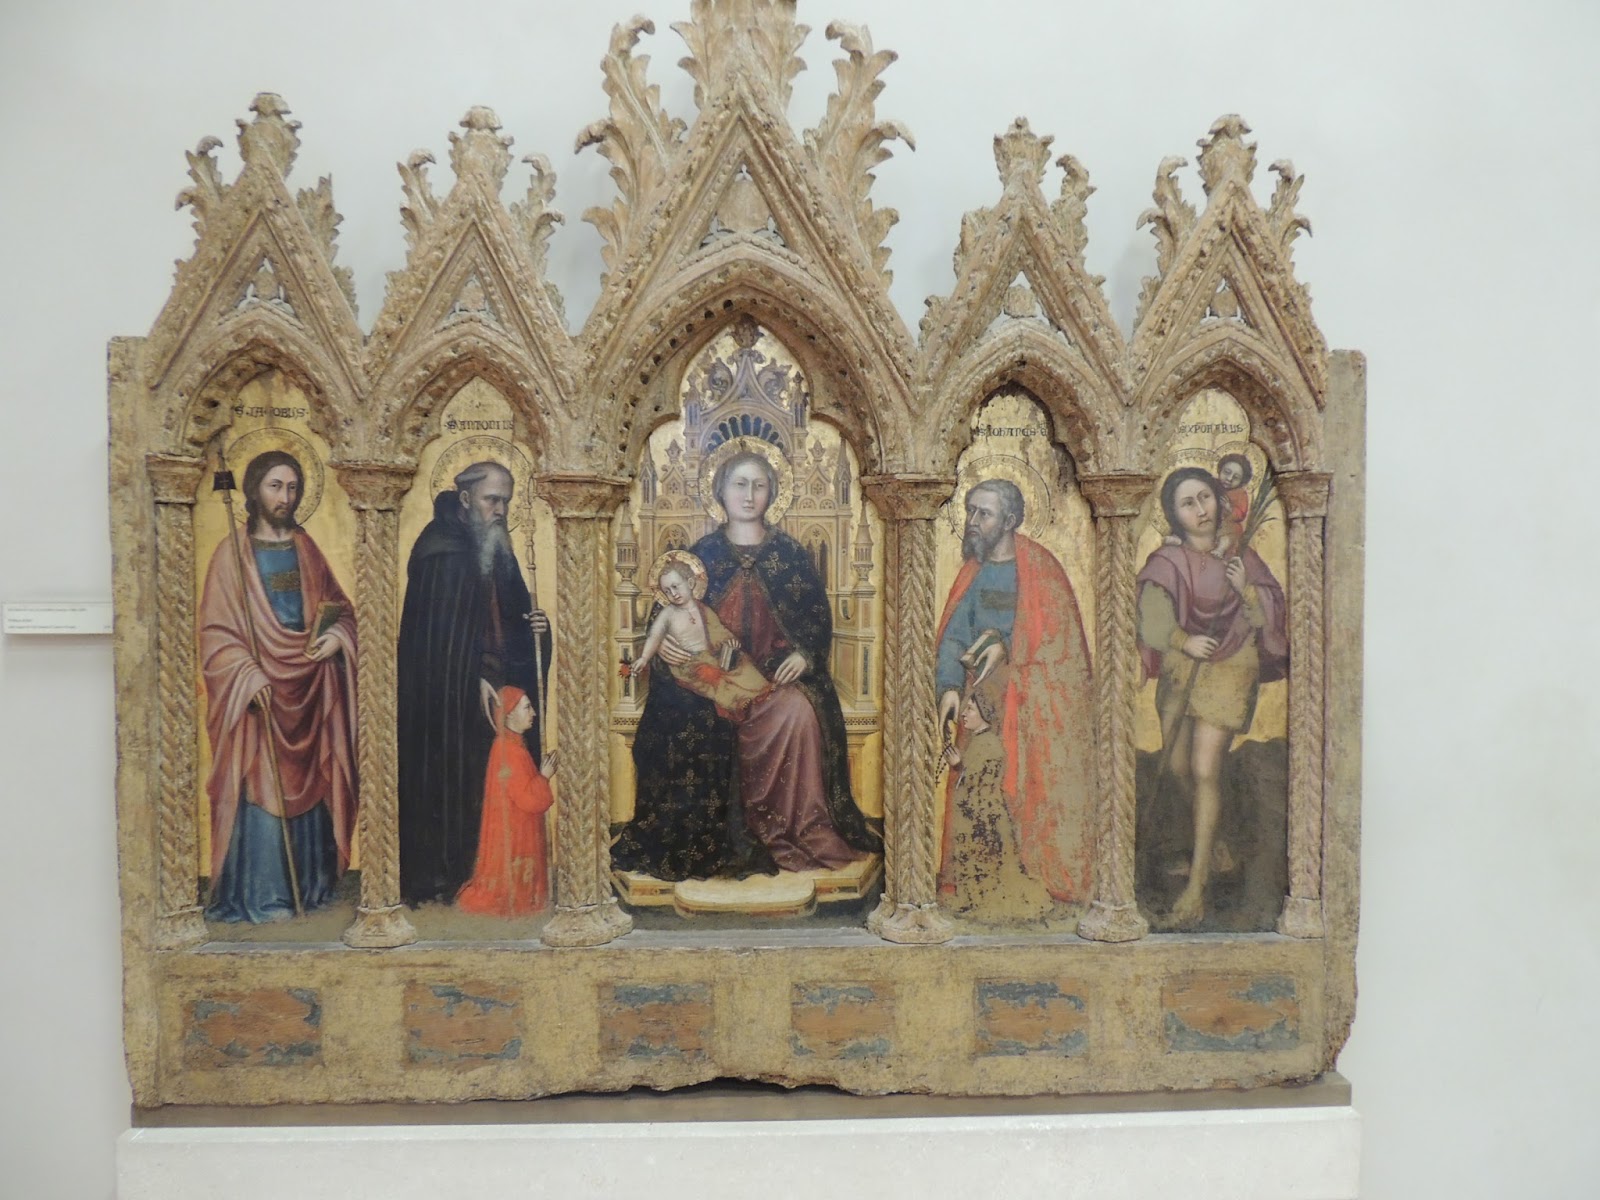 1370-99 Altichiero Boi polyptych Castelvecchio Verona provient de chapelle Zanardi de Boi,pres Caprino Veronese